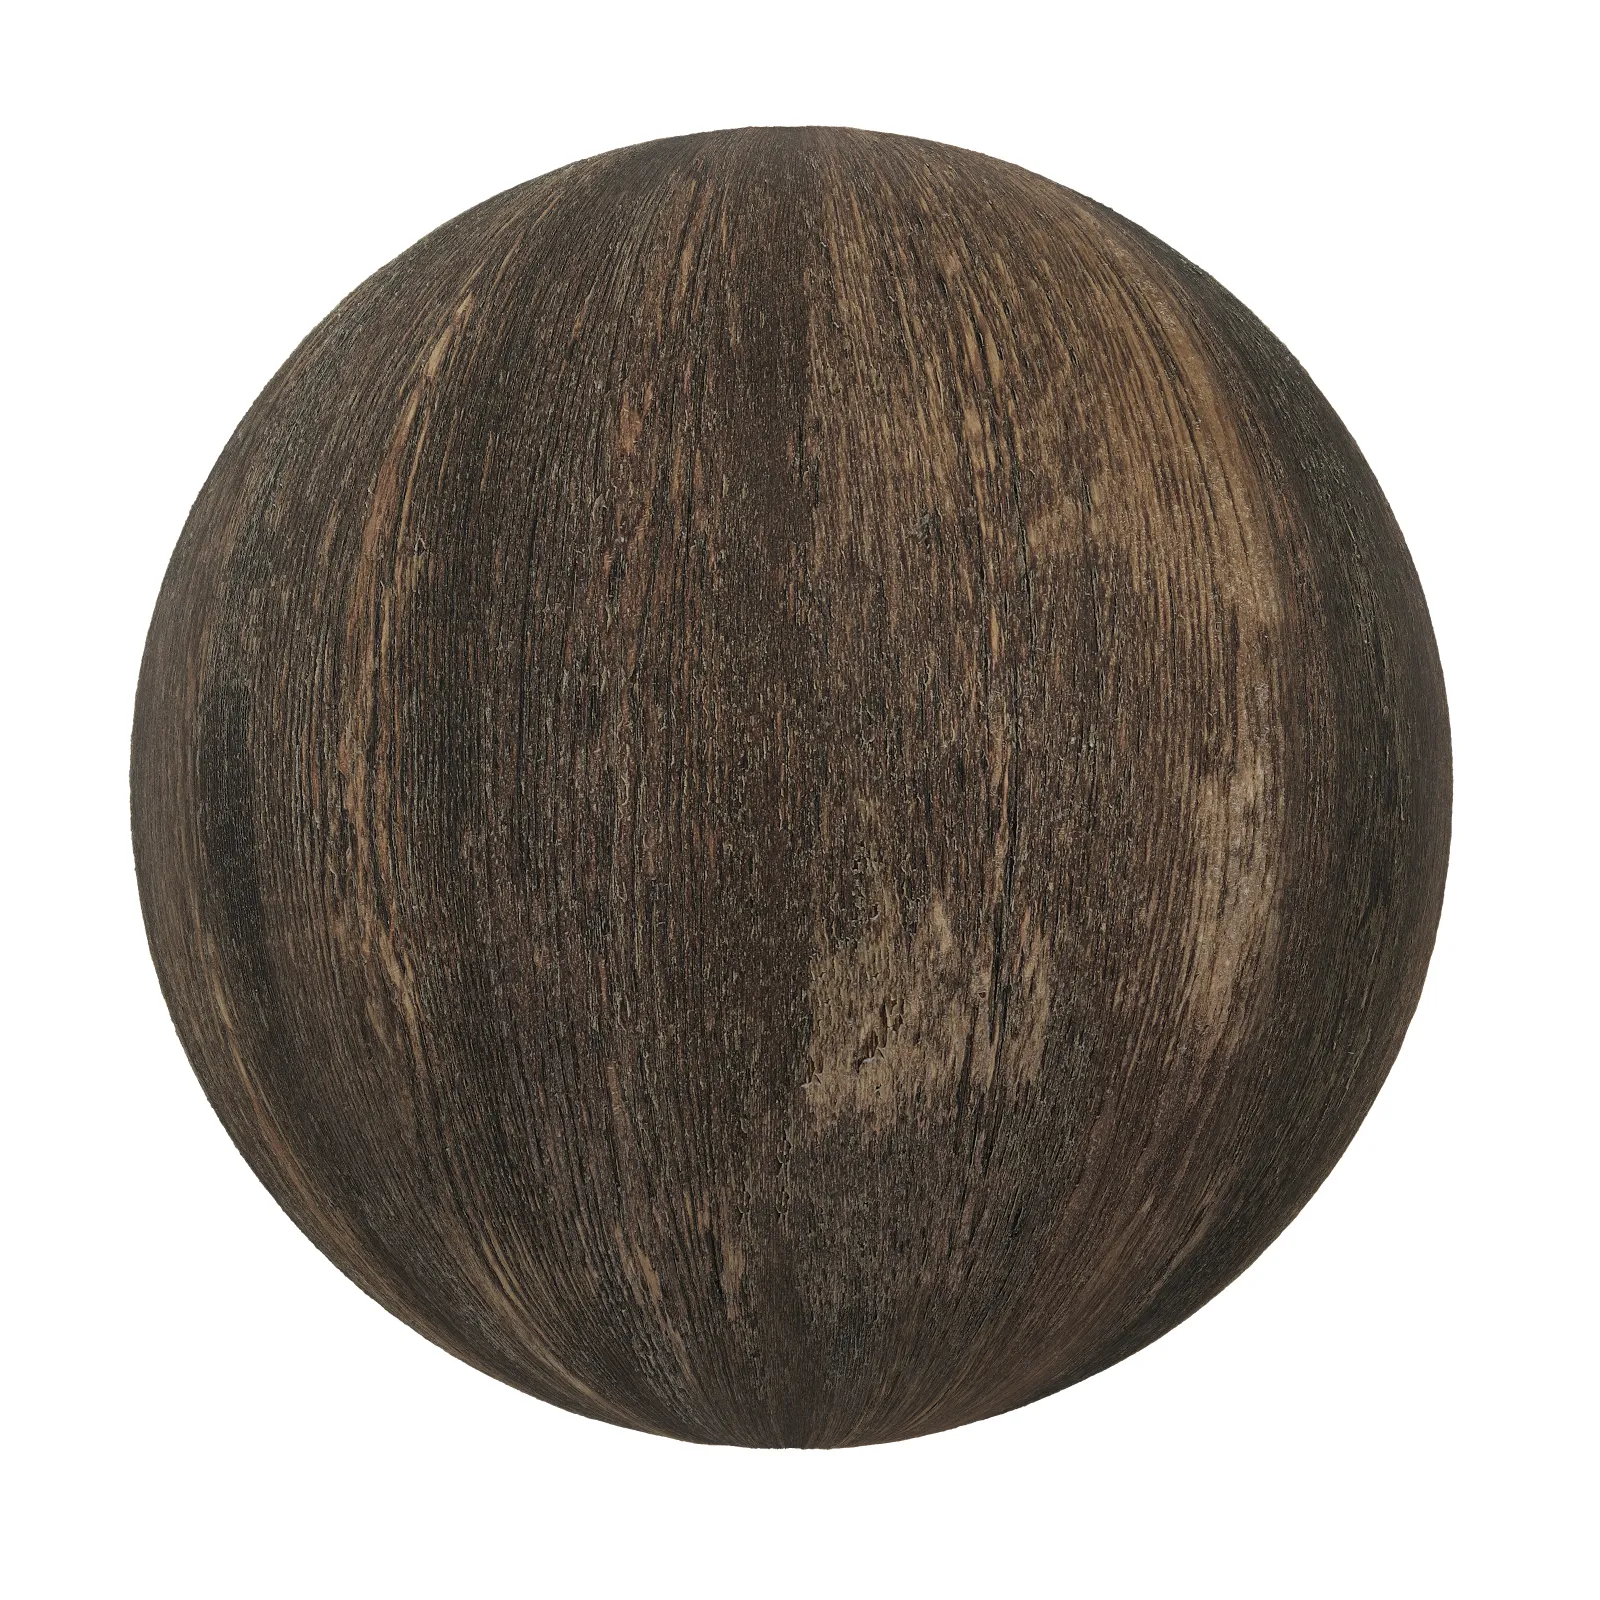 3ds Max Files – Texture – 8 – Wood Texture – 118 – Wood Texture by Minh Nguyen